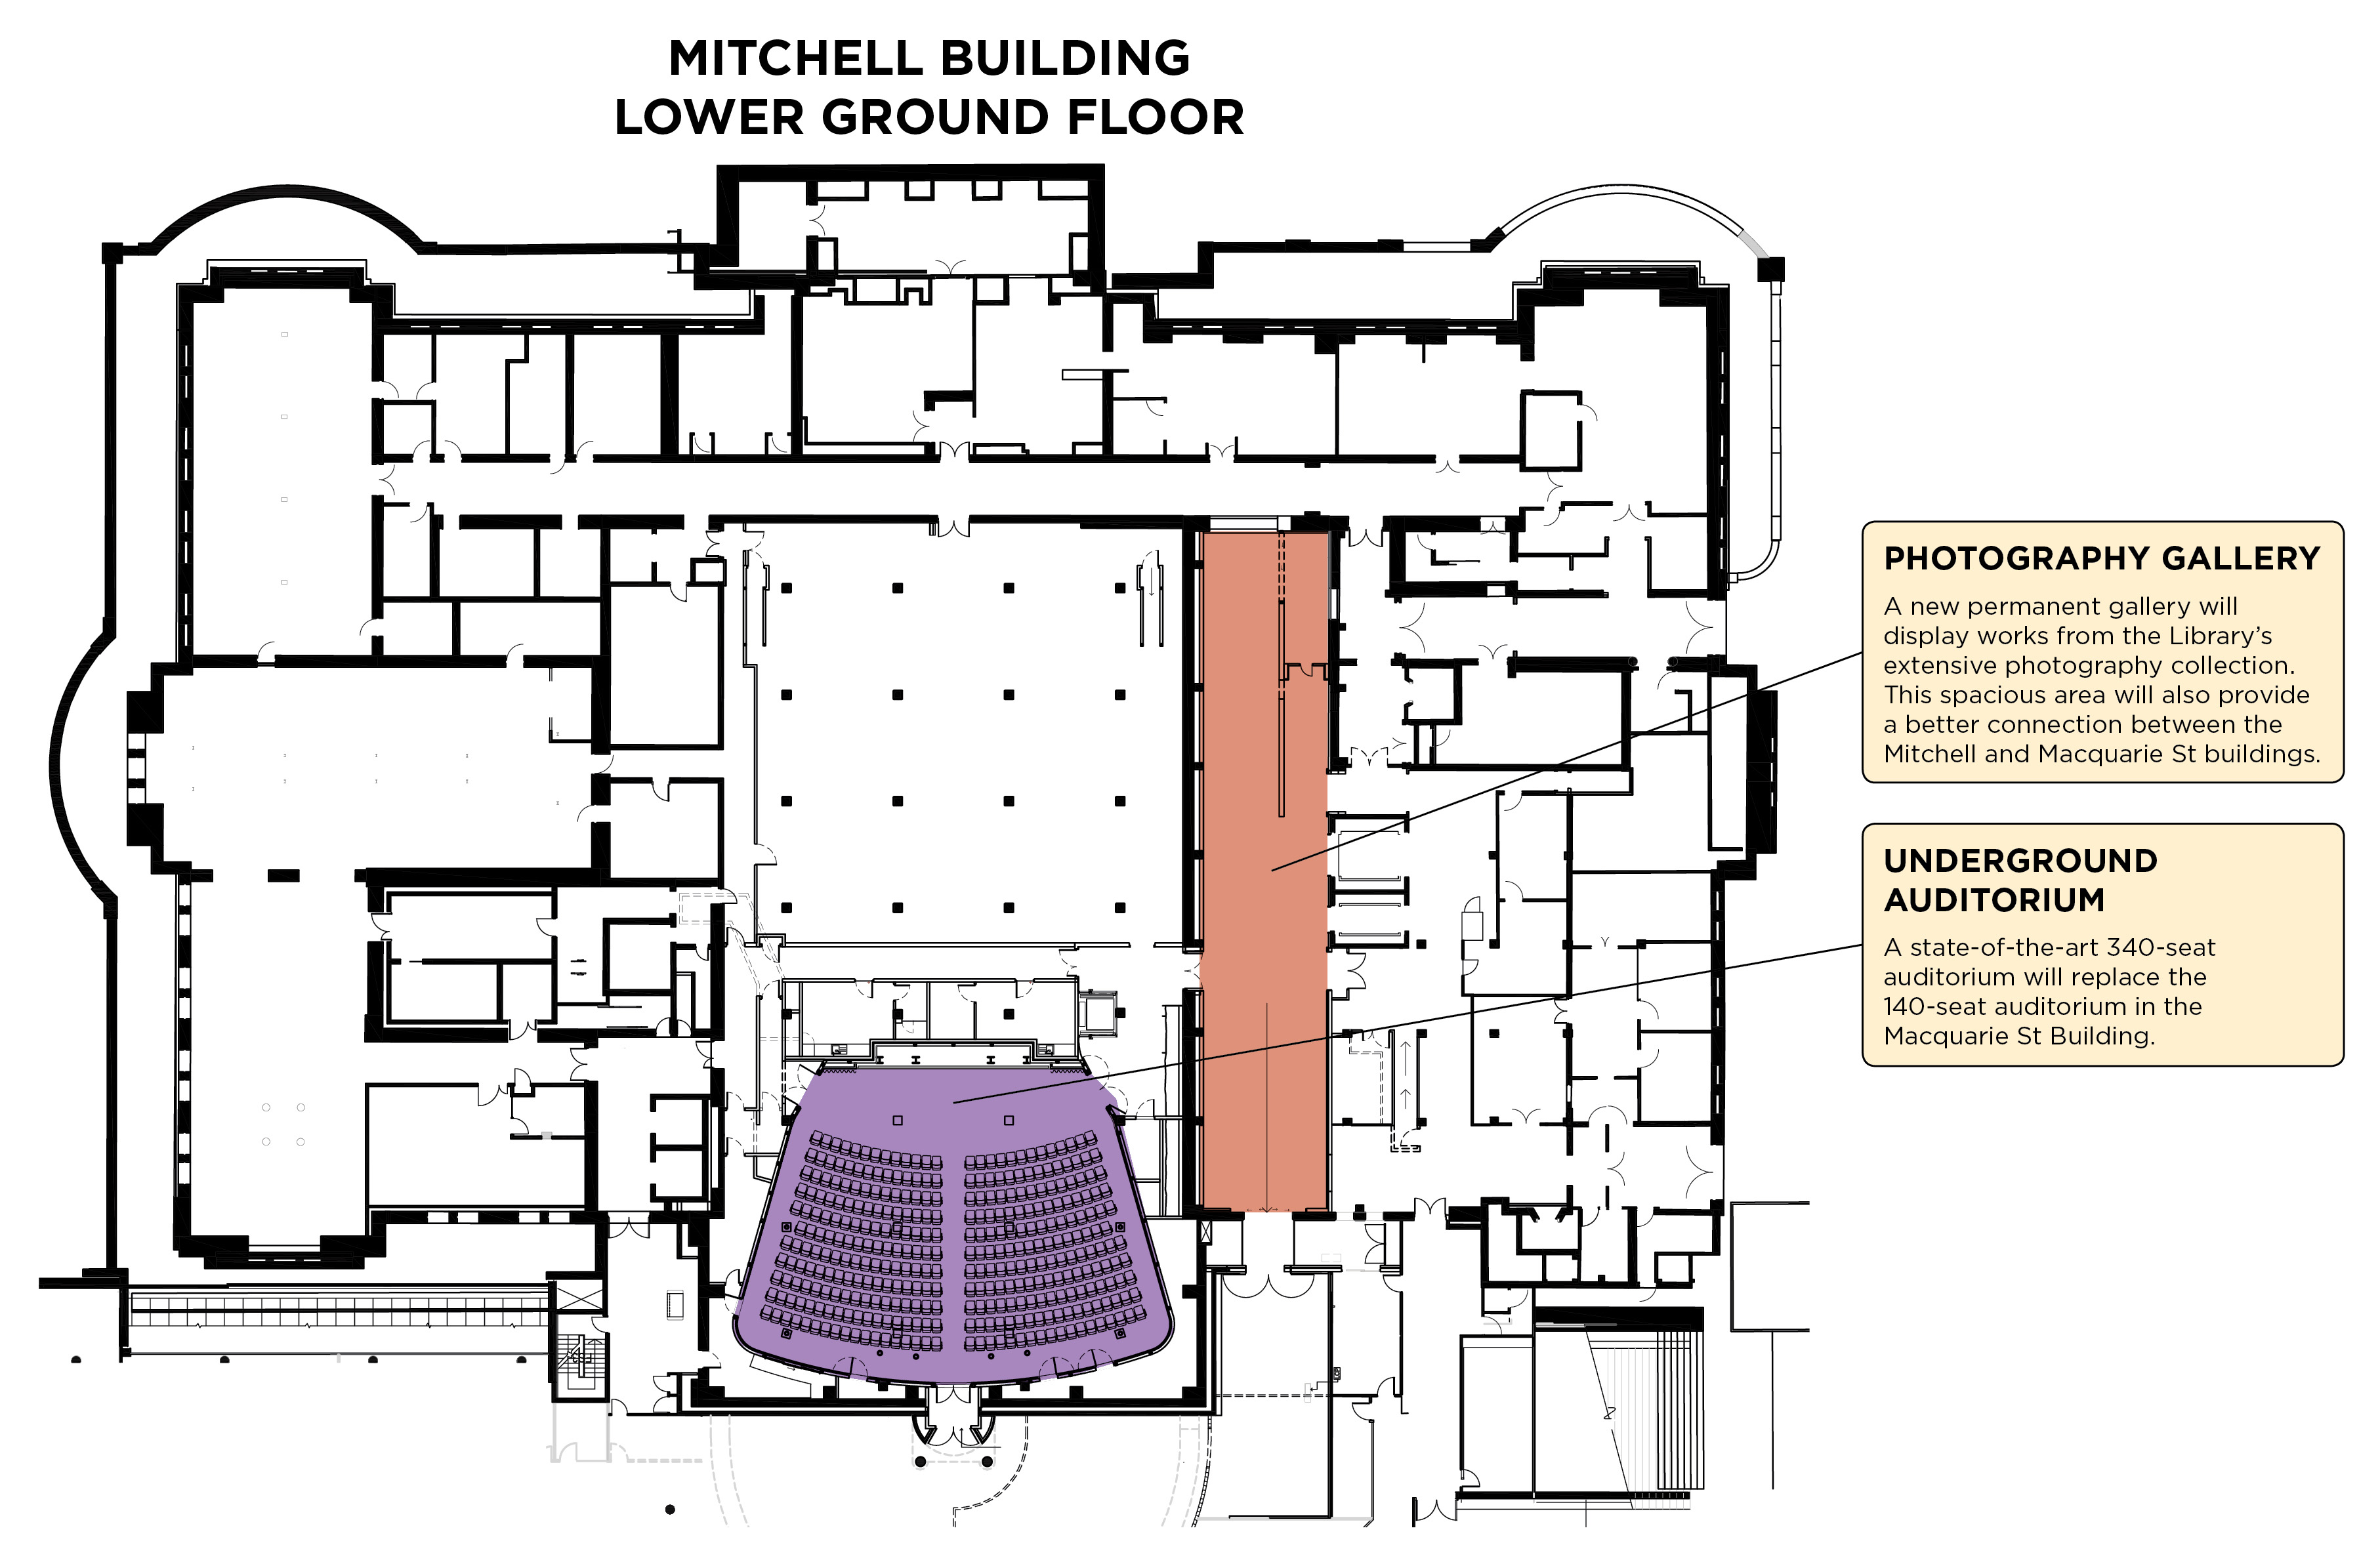 Mitchell Building Lower Ground Floor, floor plan